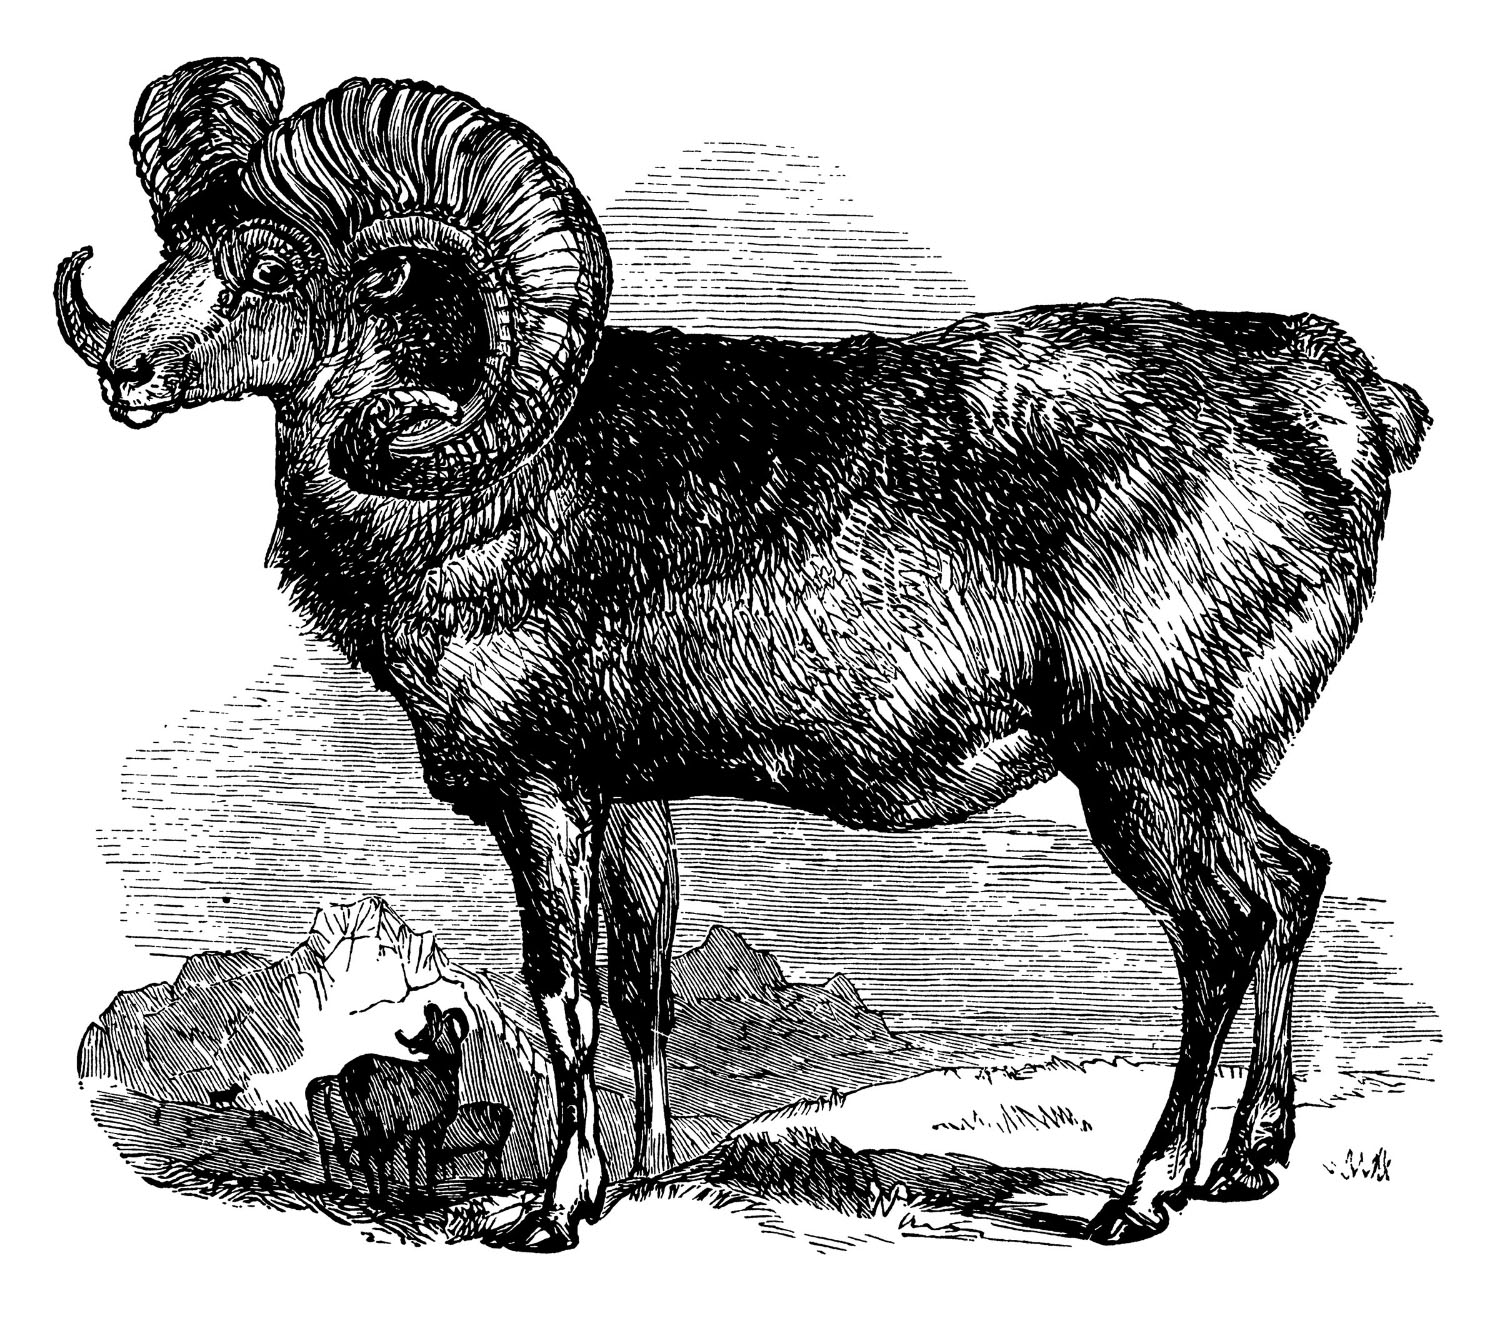 An illustration of a bighorn sheep